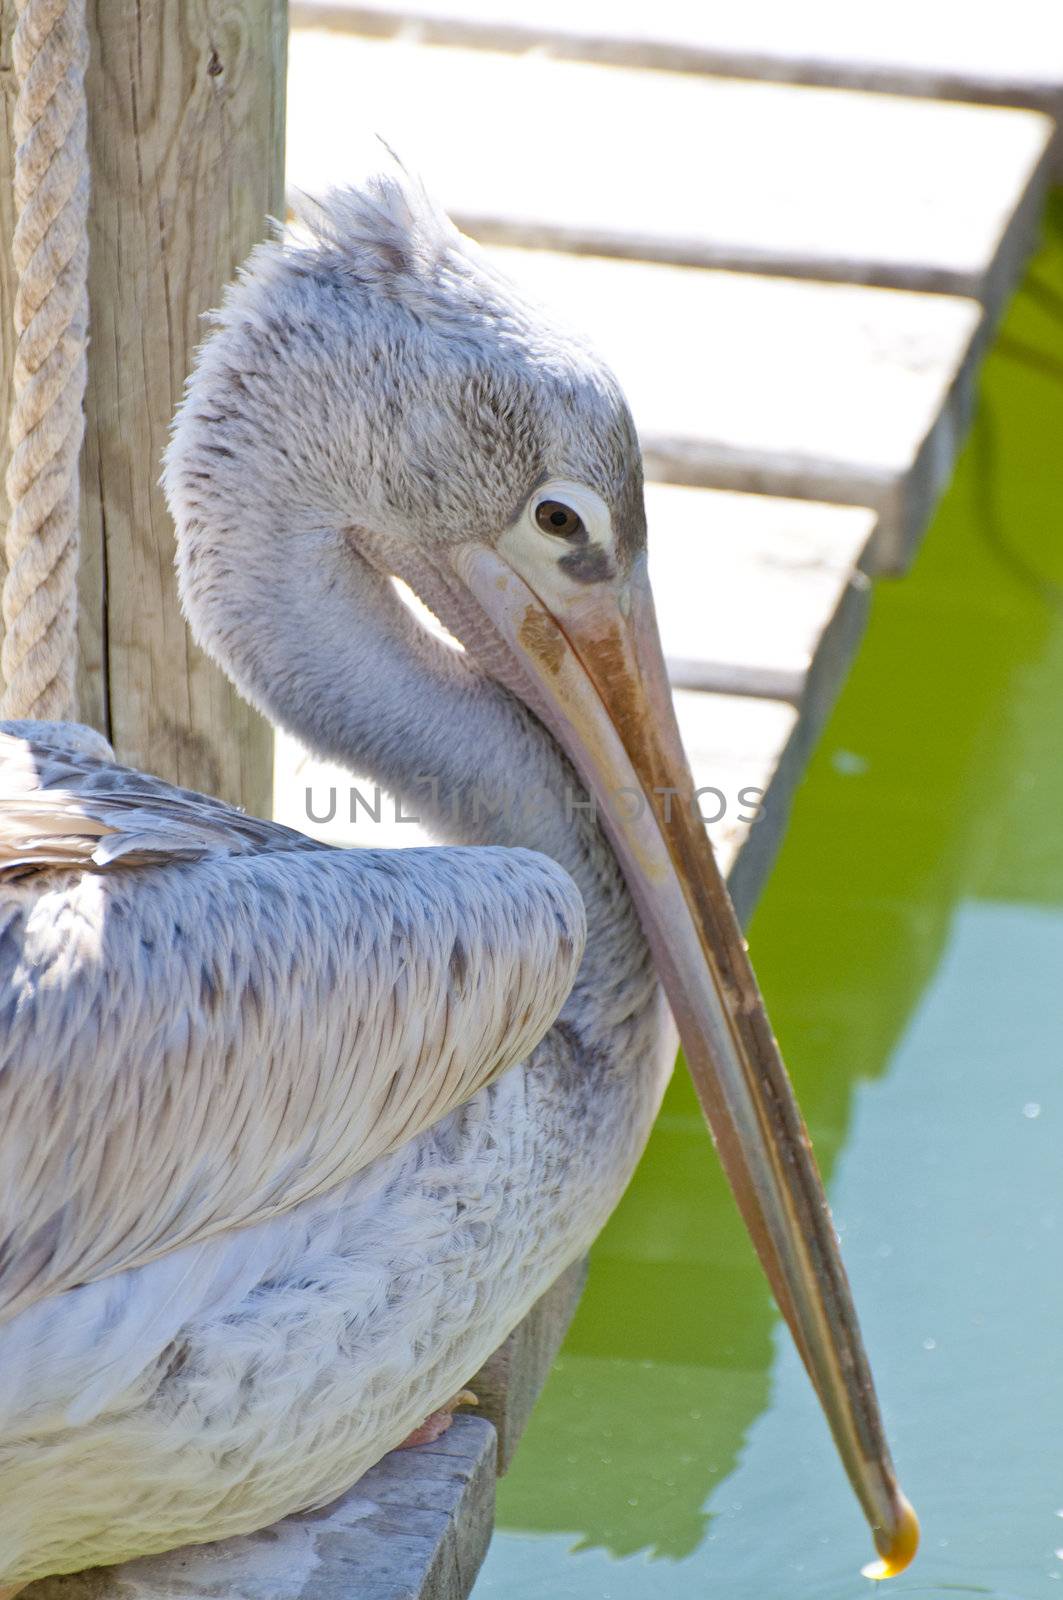 Picture of a pelican. Big beak